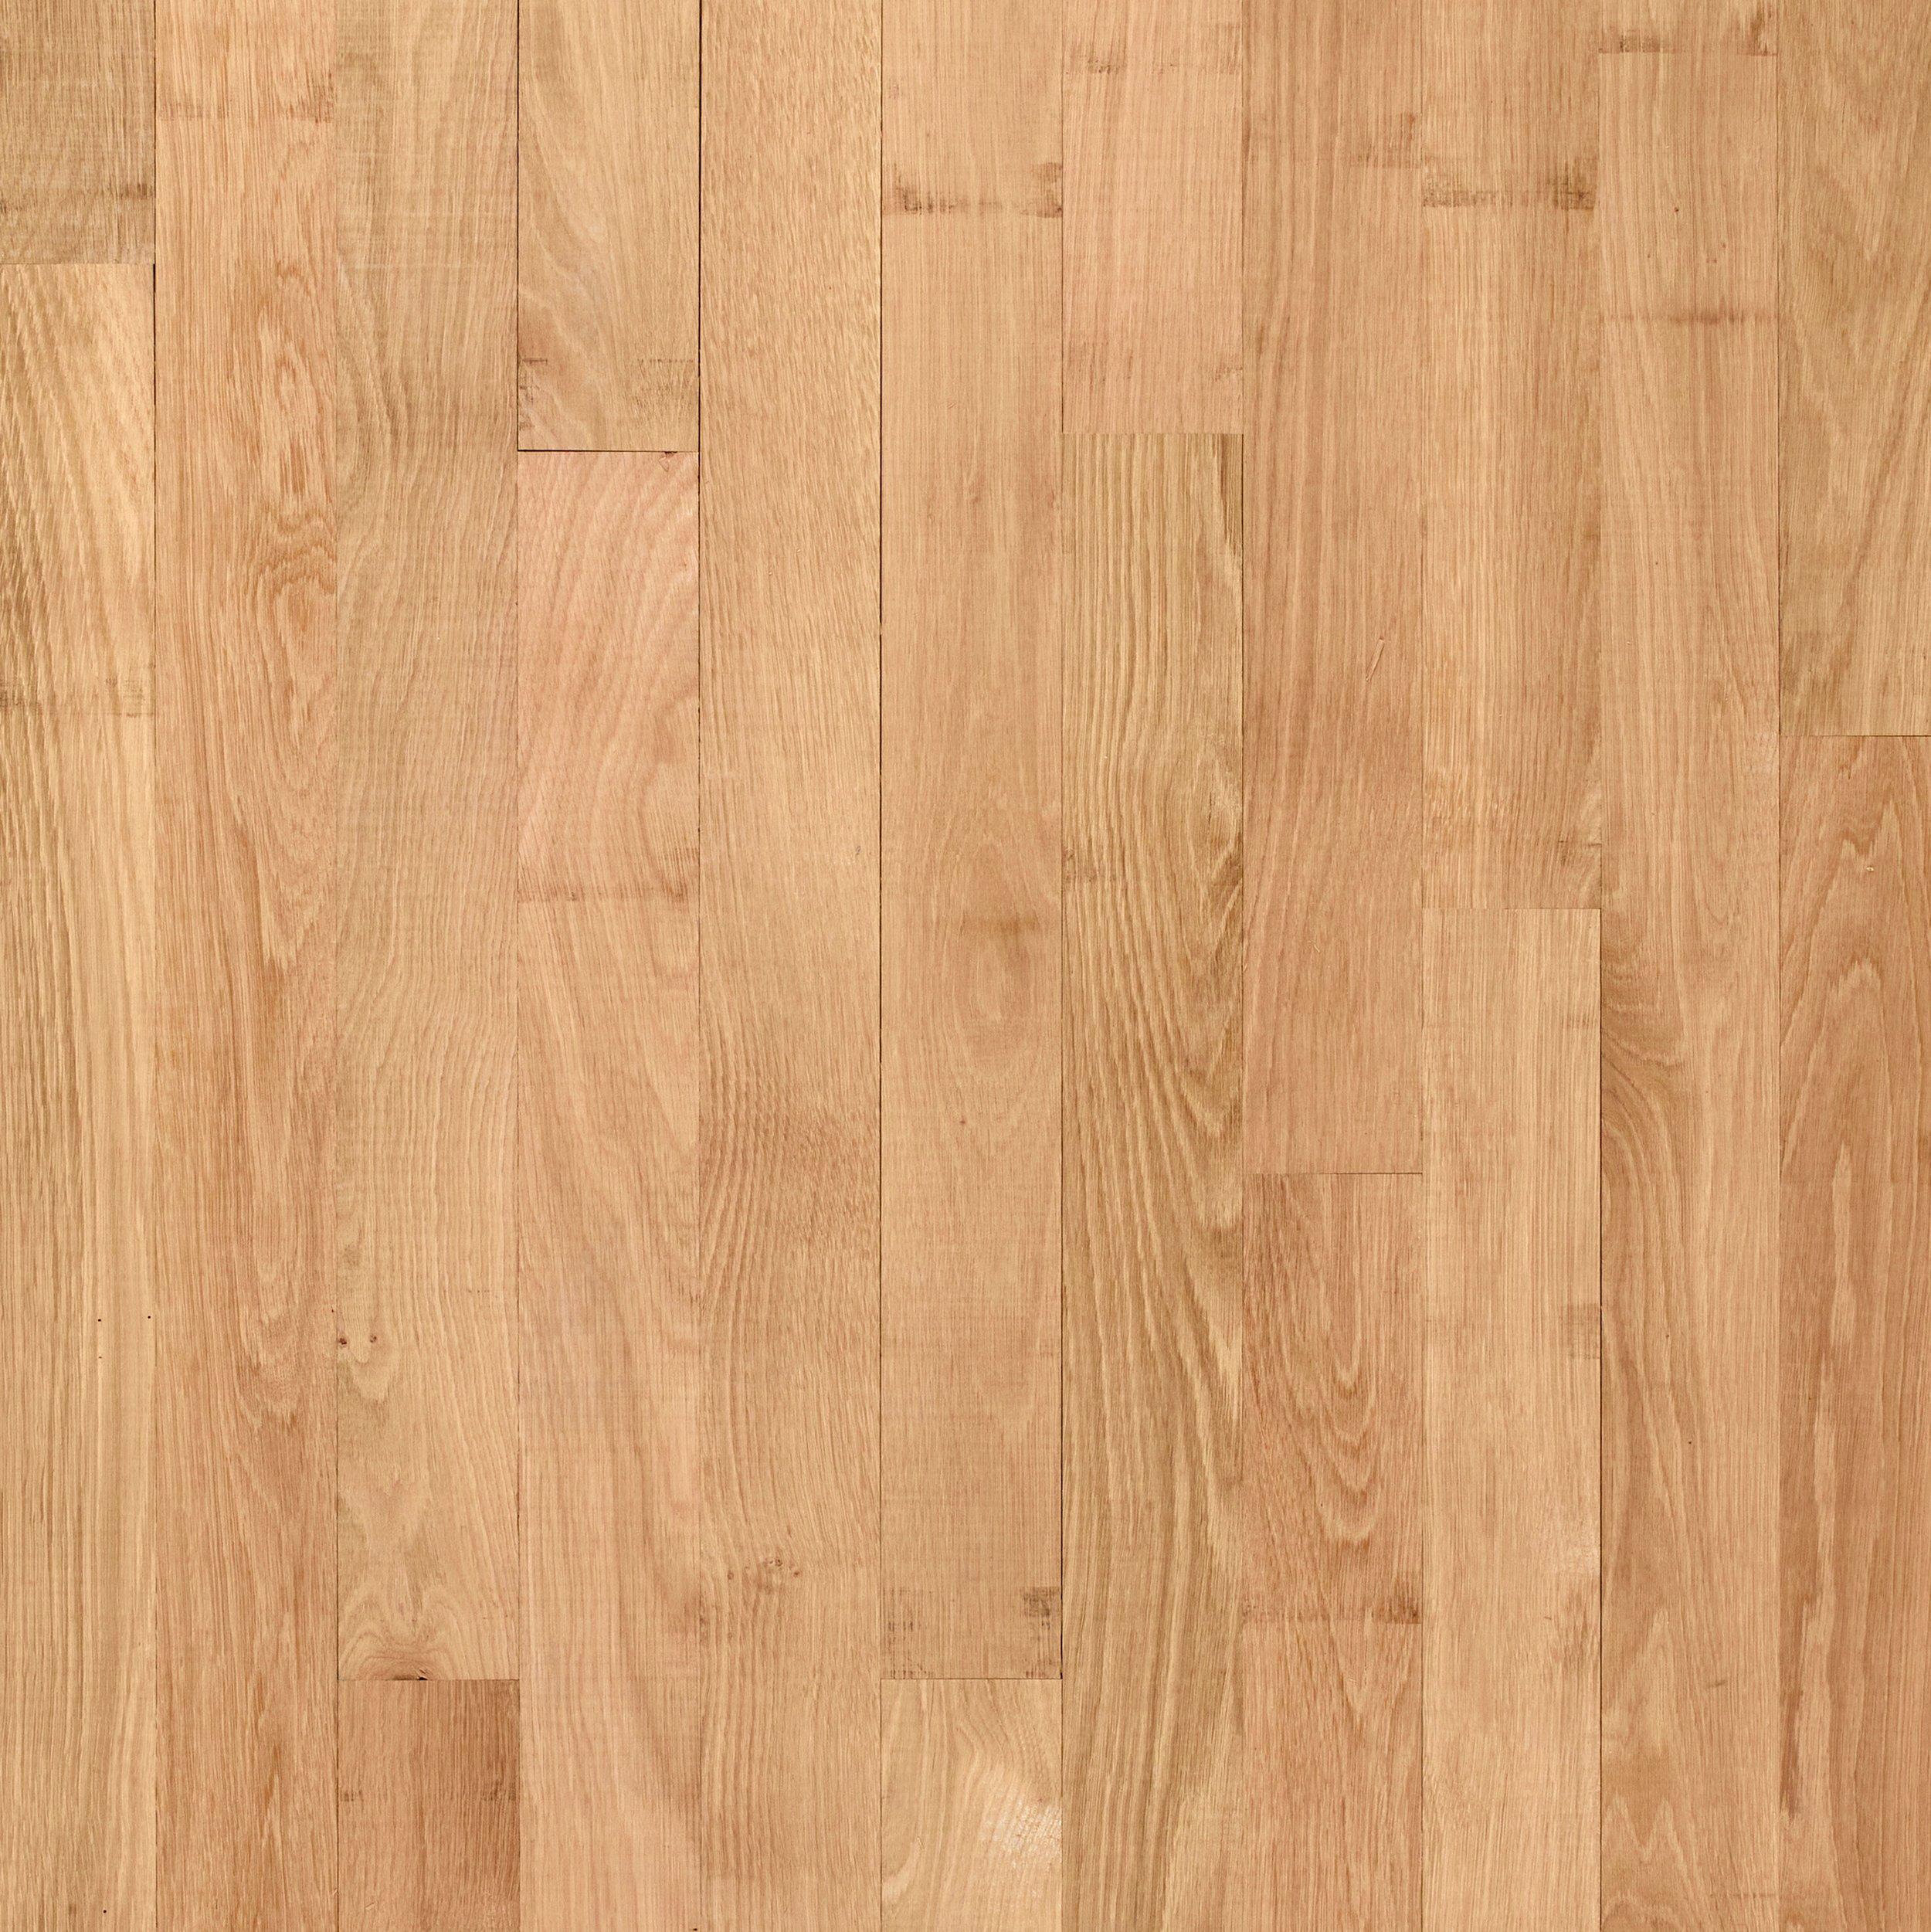 Unfinished White Oak Solid Hardwood Select Grade